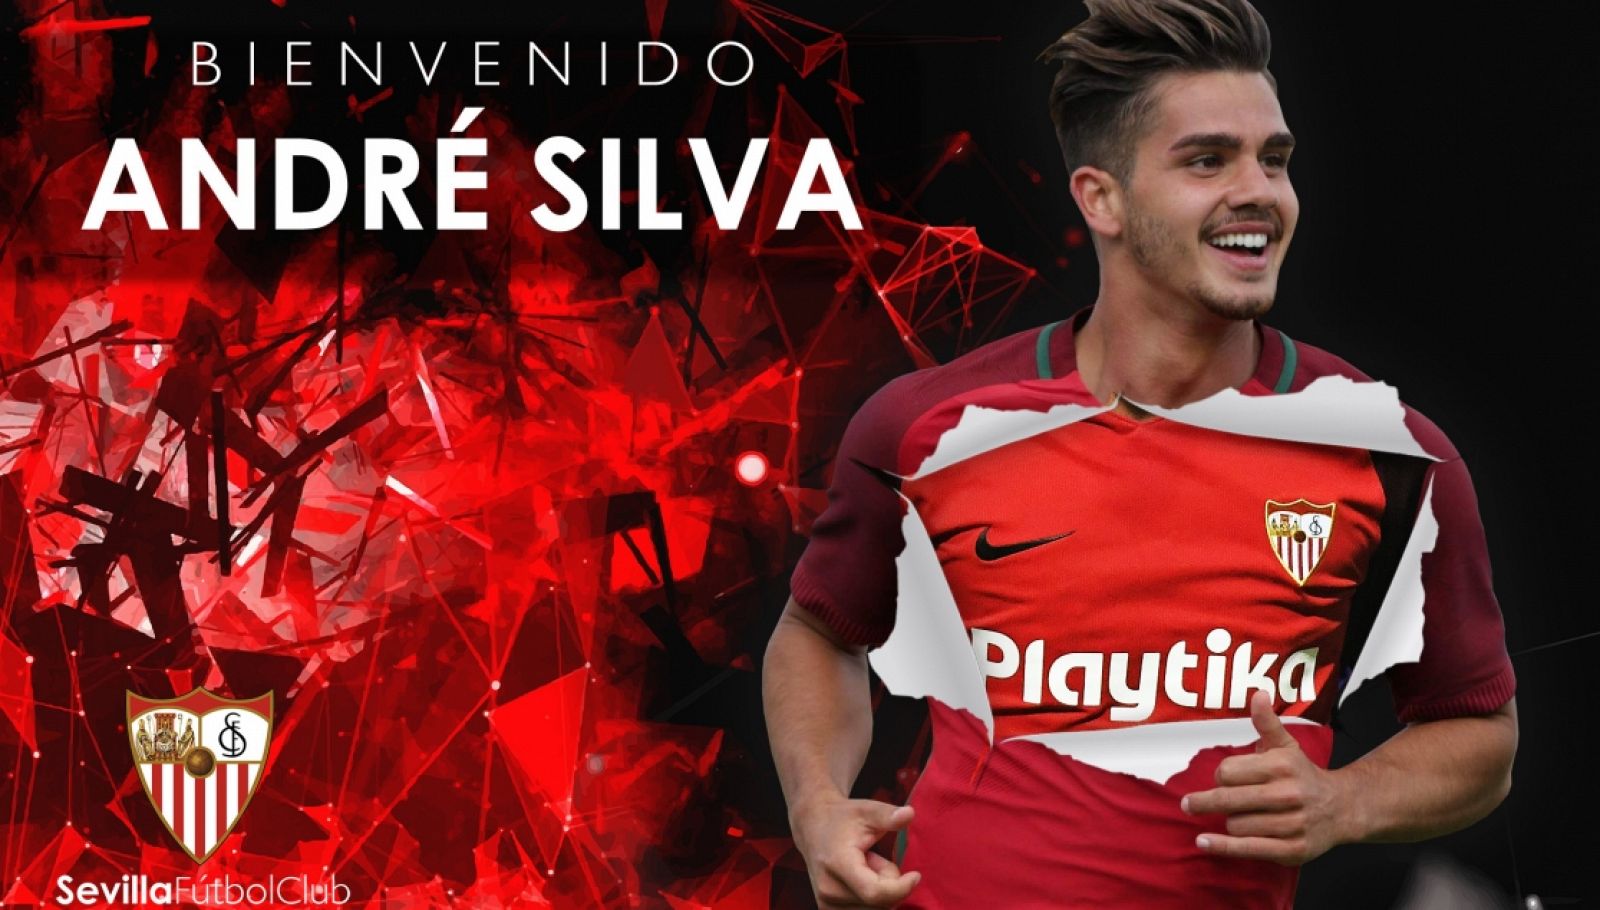 Imagen del anuncio de André Silva en la web del Sevilla.